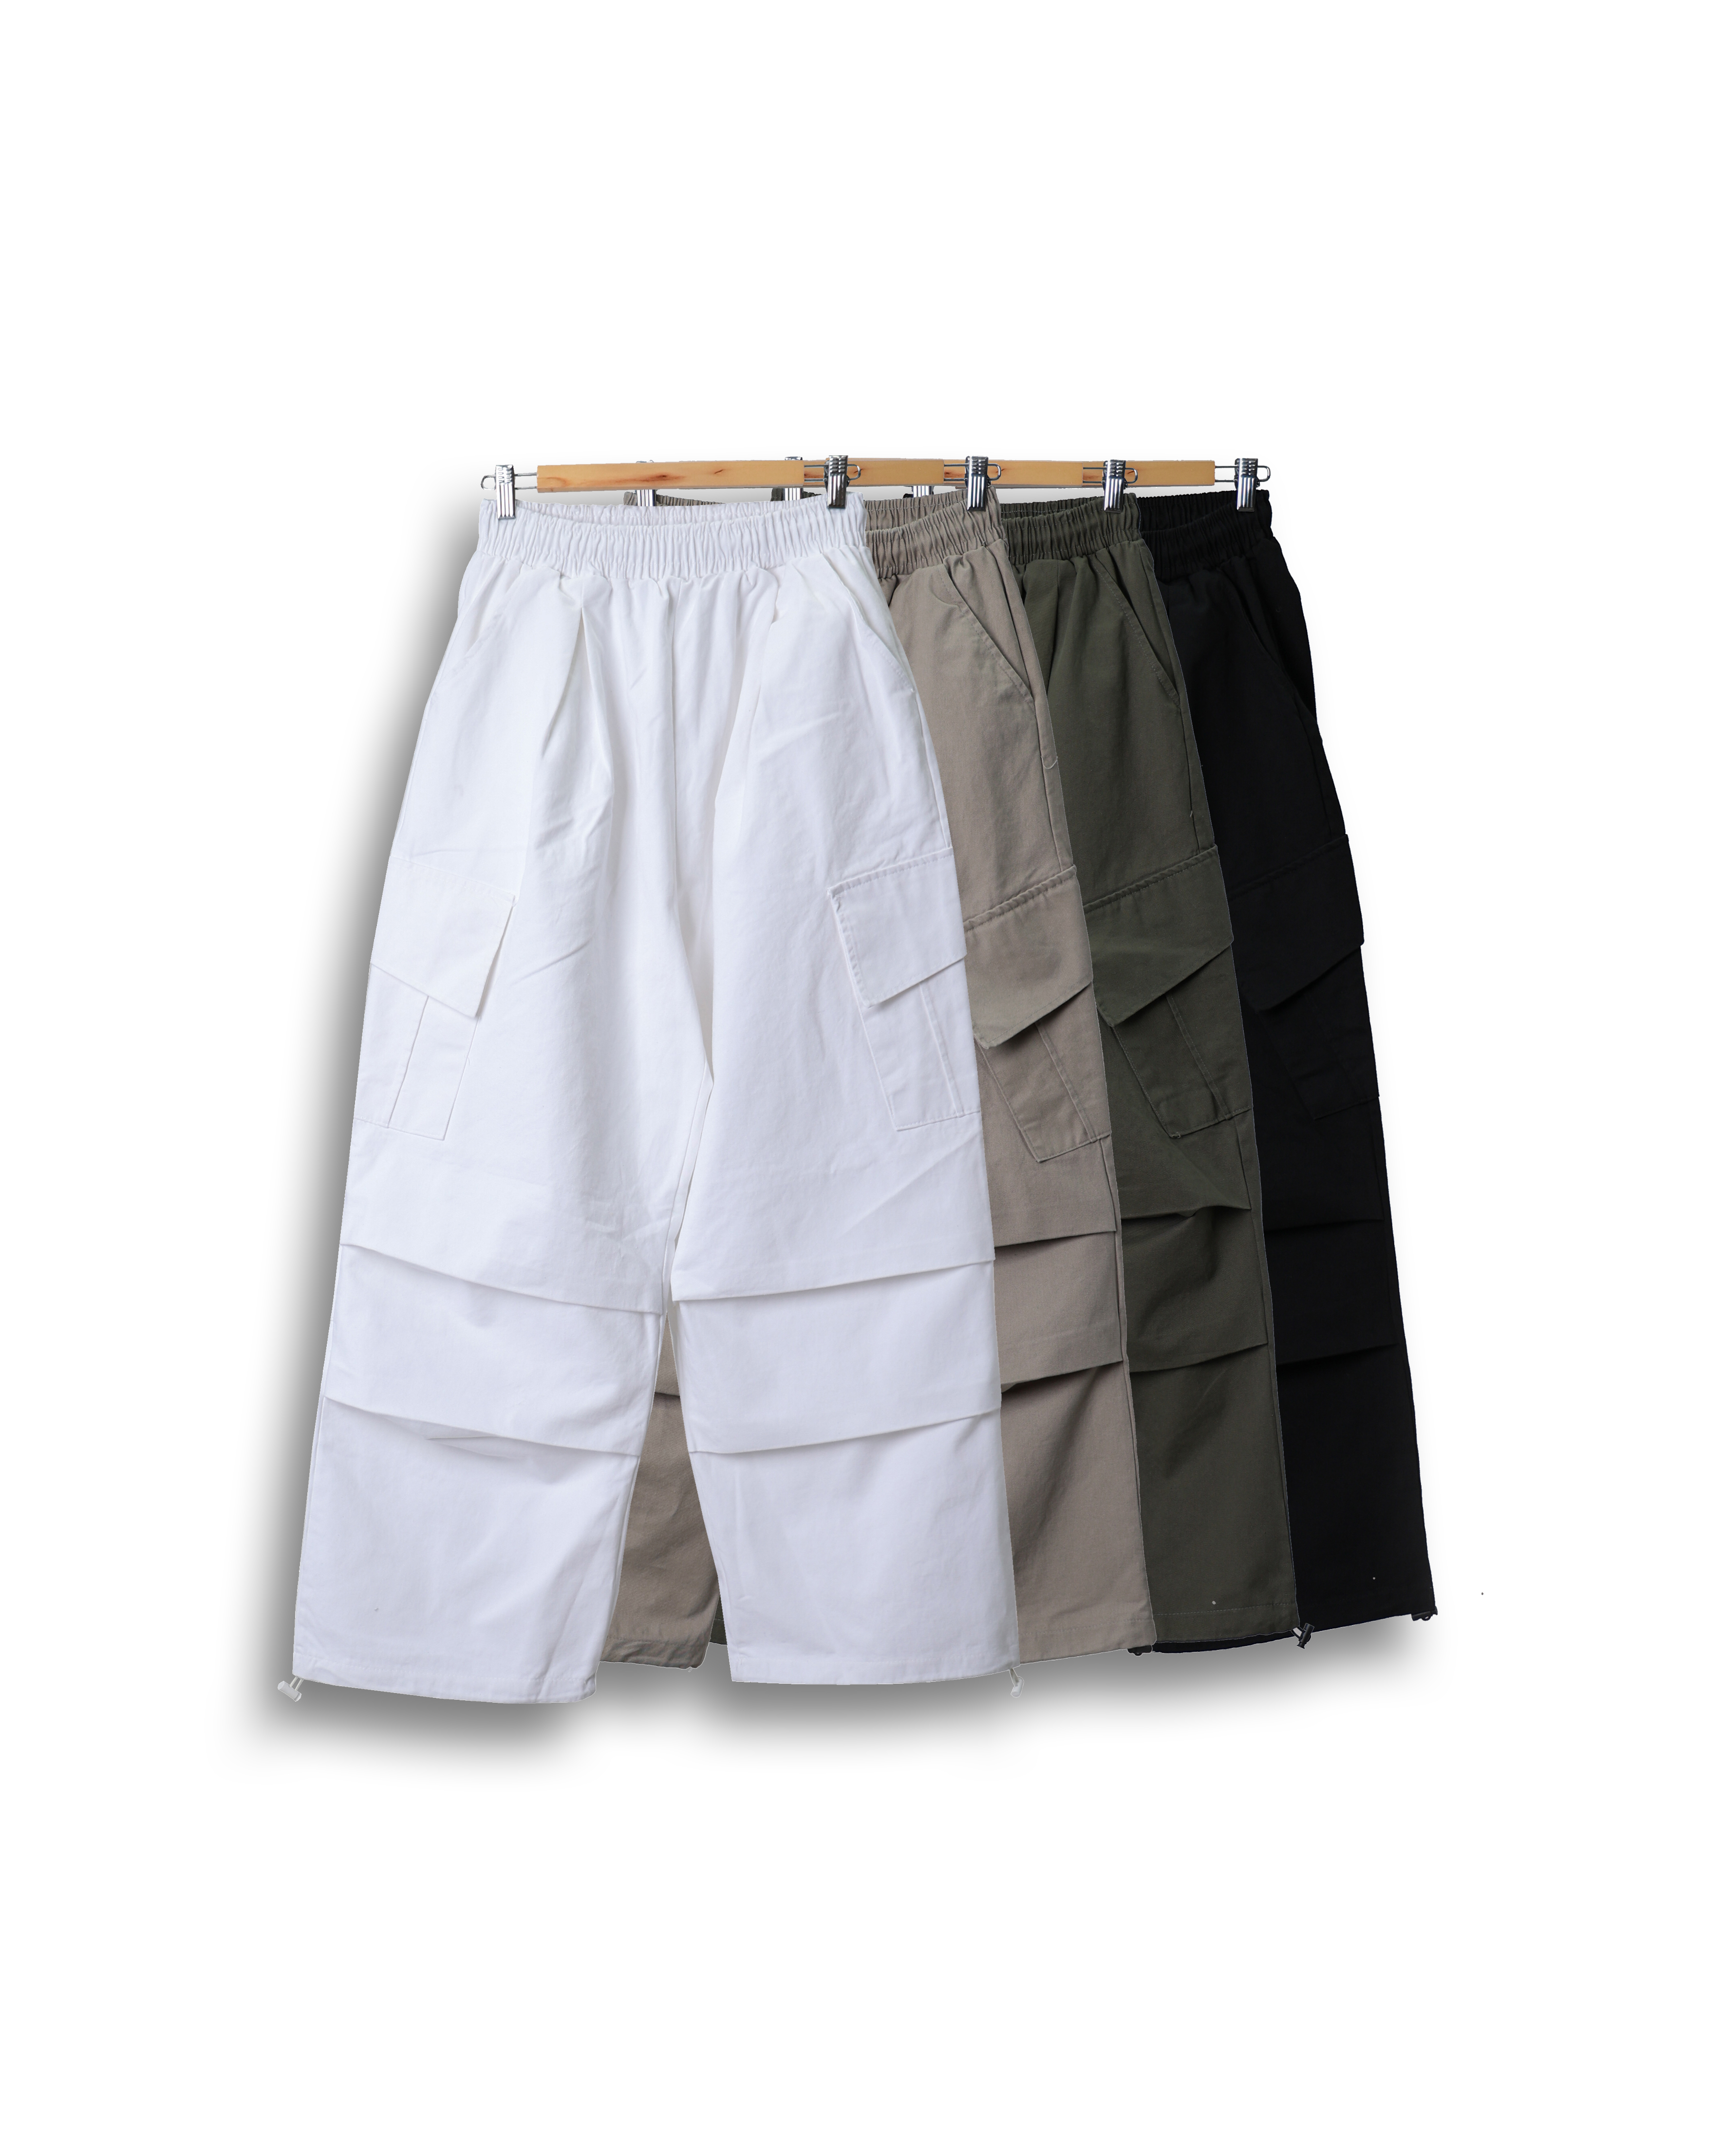 LUS Multi Pocket Snow Mil Cargo Pants (Black/Olive/Beige/Ivory)